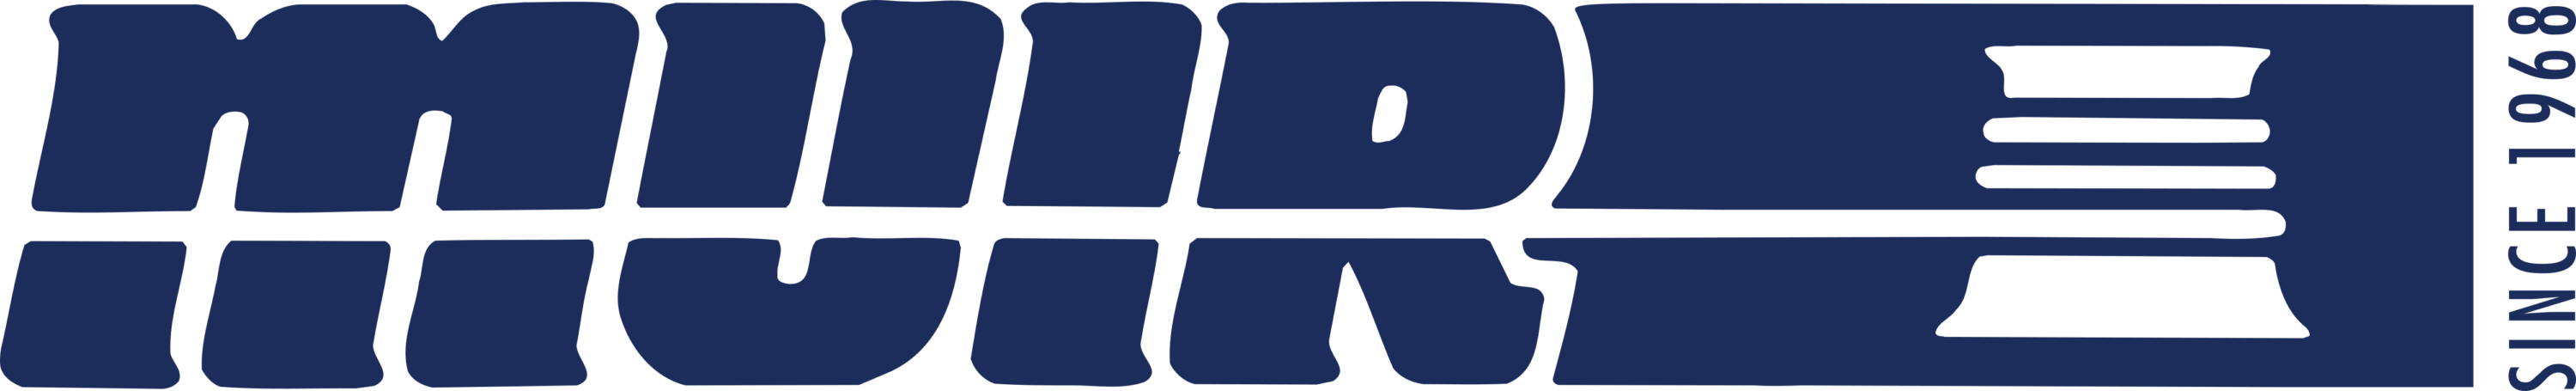 Muir Windlasses Australia Logo